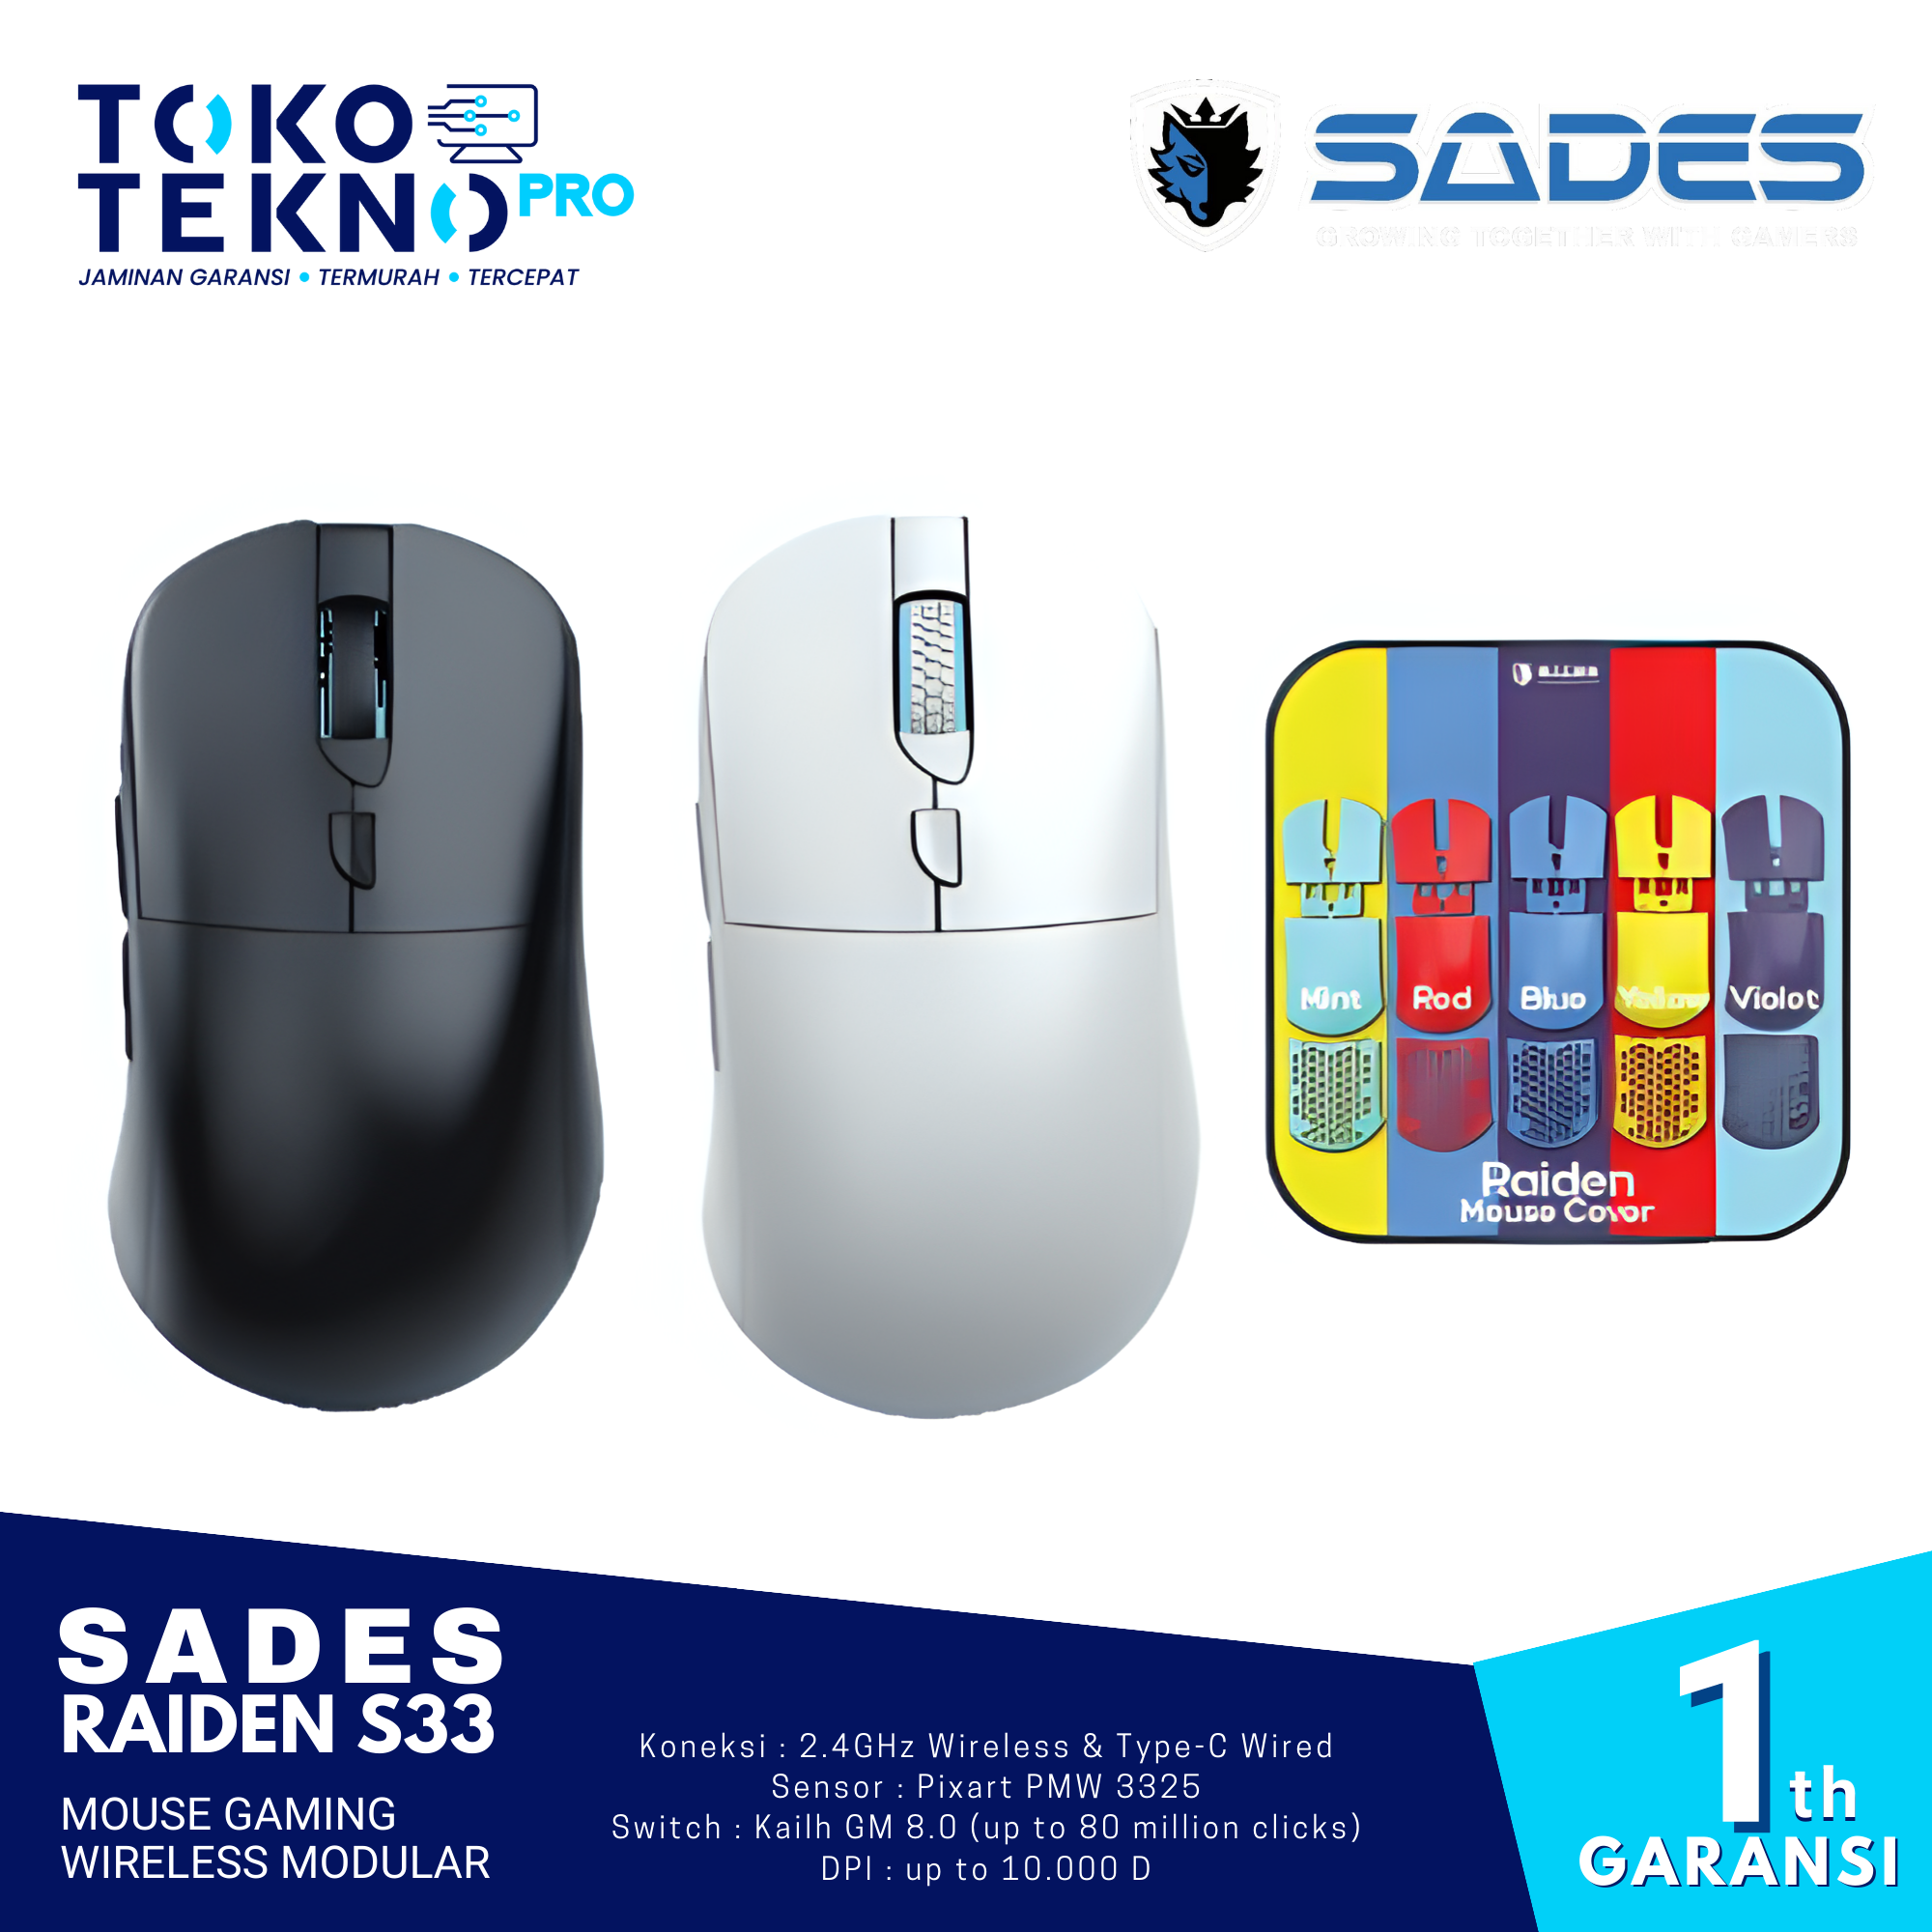 Sades Raiden S33 Mouse Gaming Wireless Modular Dual Mode